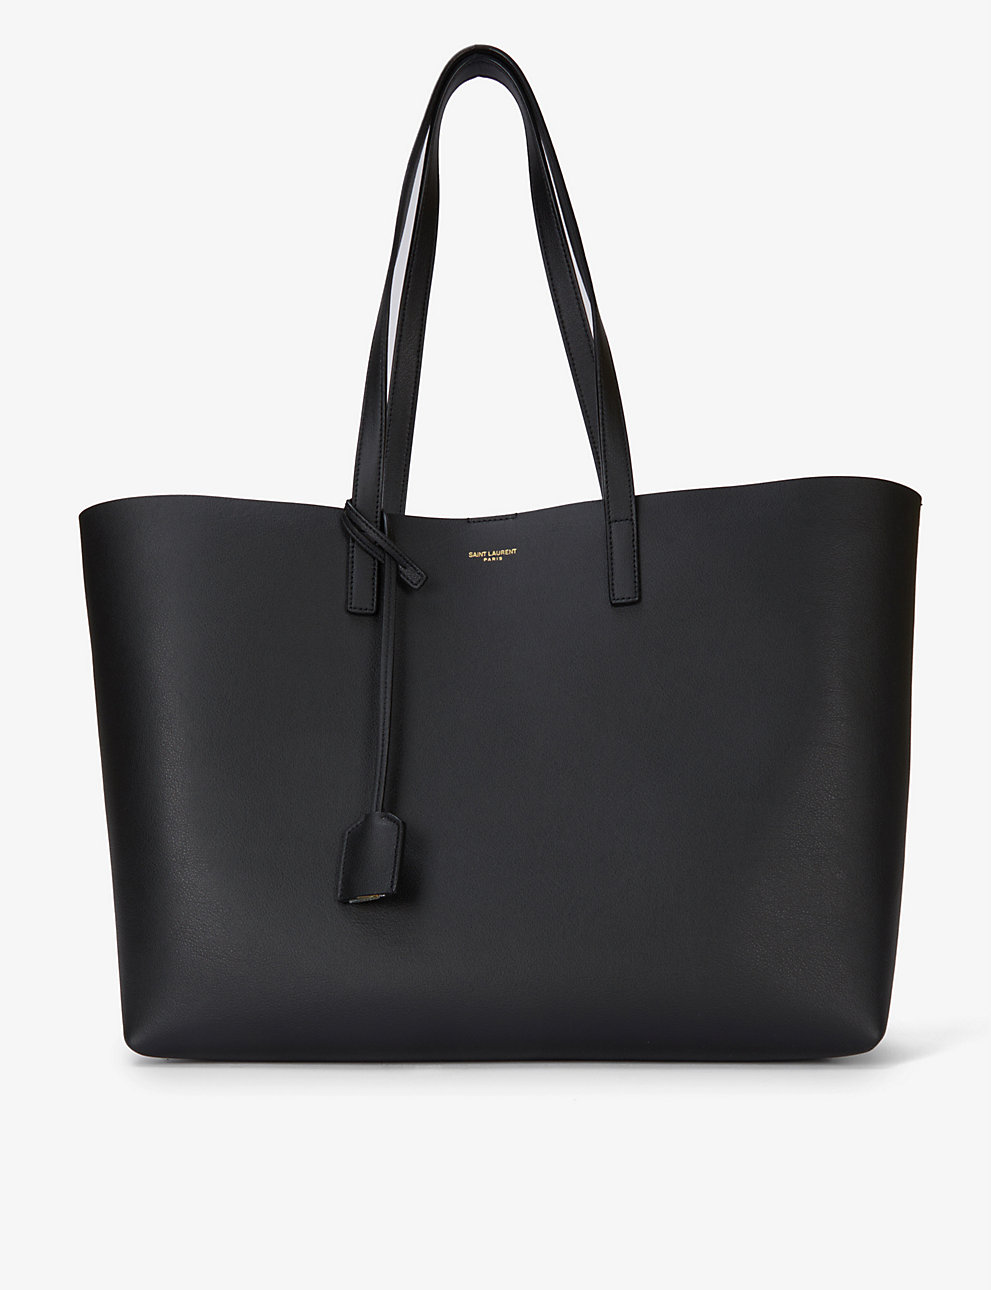 YVES SAINT LAURENT YSL paper Black Shopping Bag 20.5”x12.5”x6